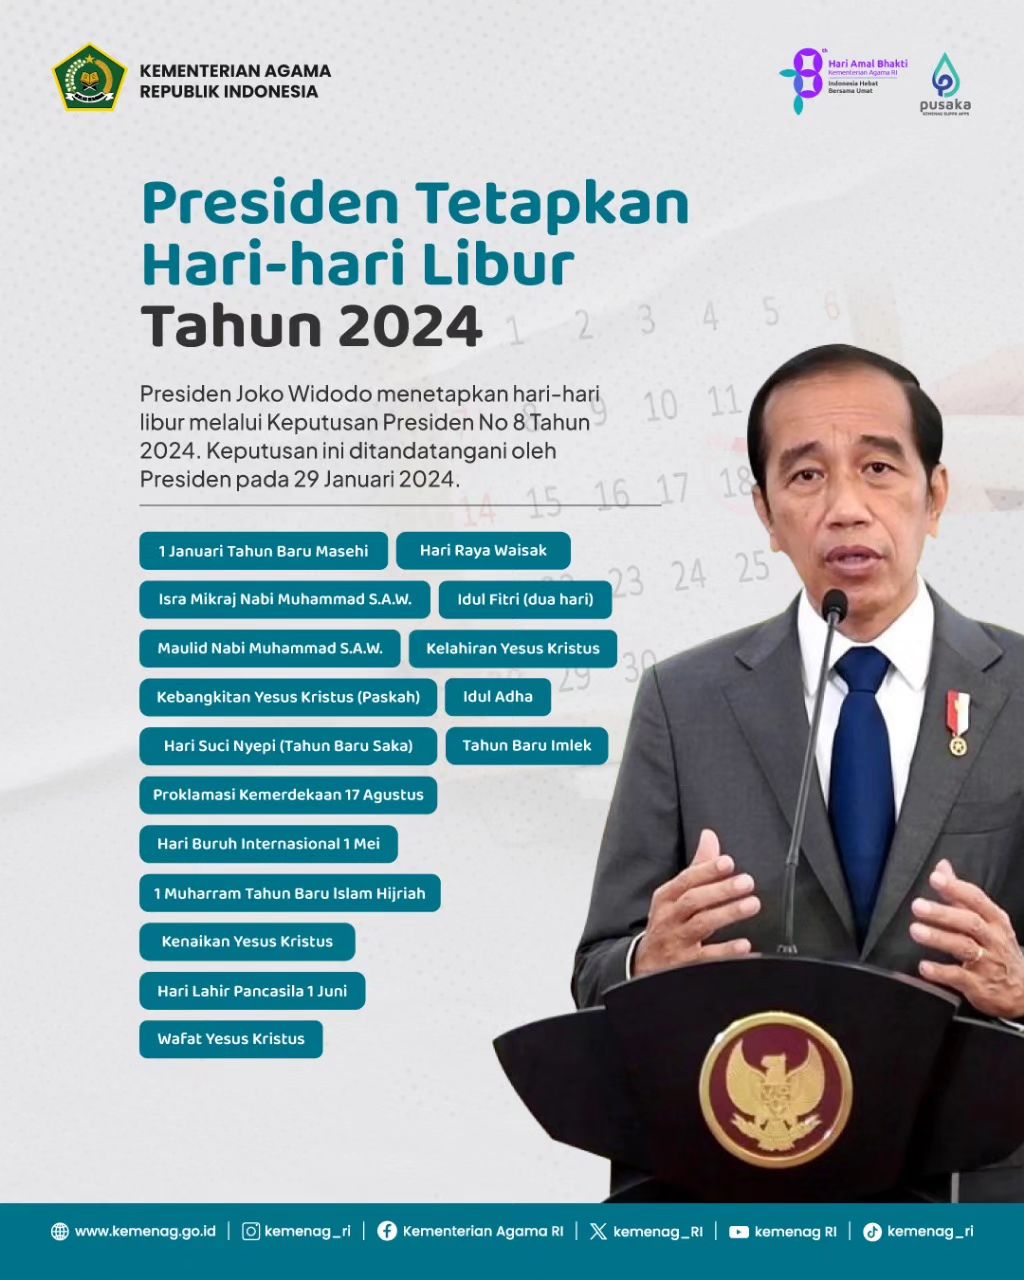  Presiden Joko Widodo menetapkan hari-hari libur melalui Keputusan Presiden No 8 Tahun 2024